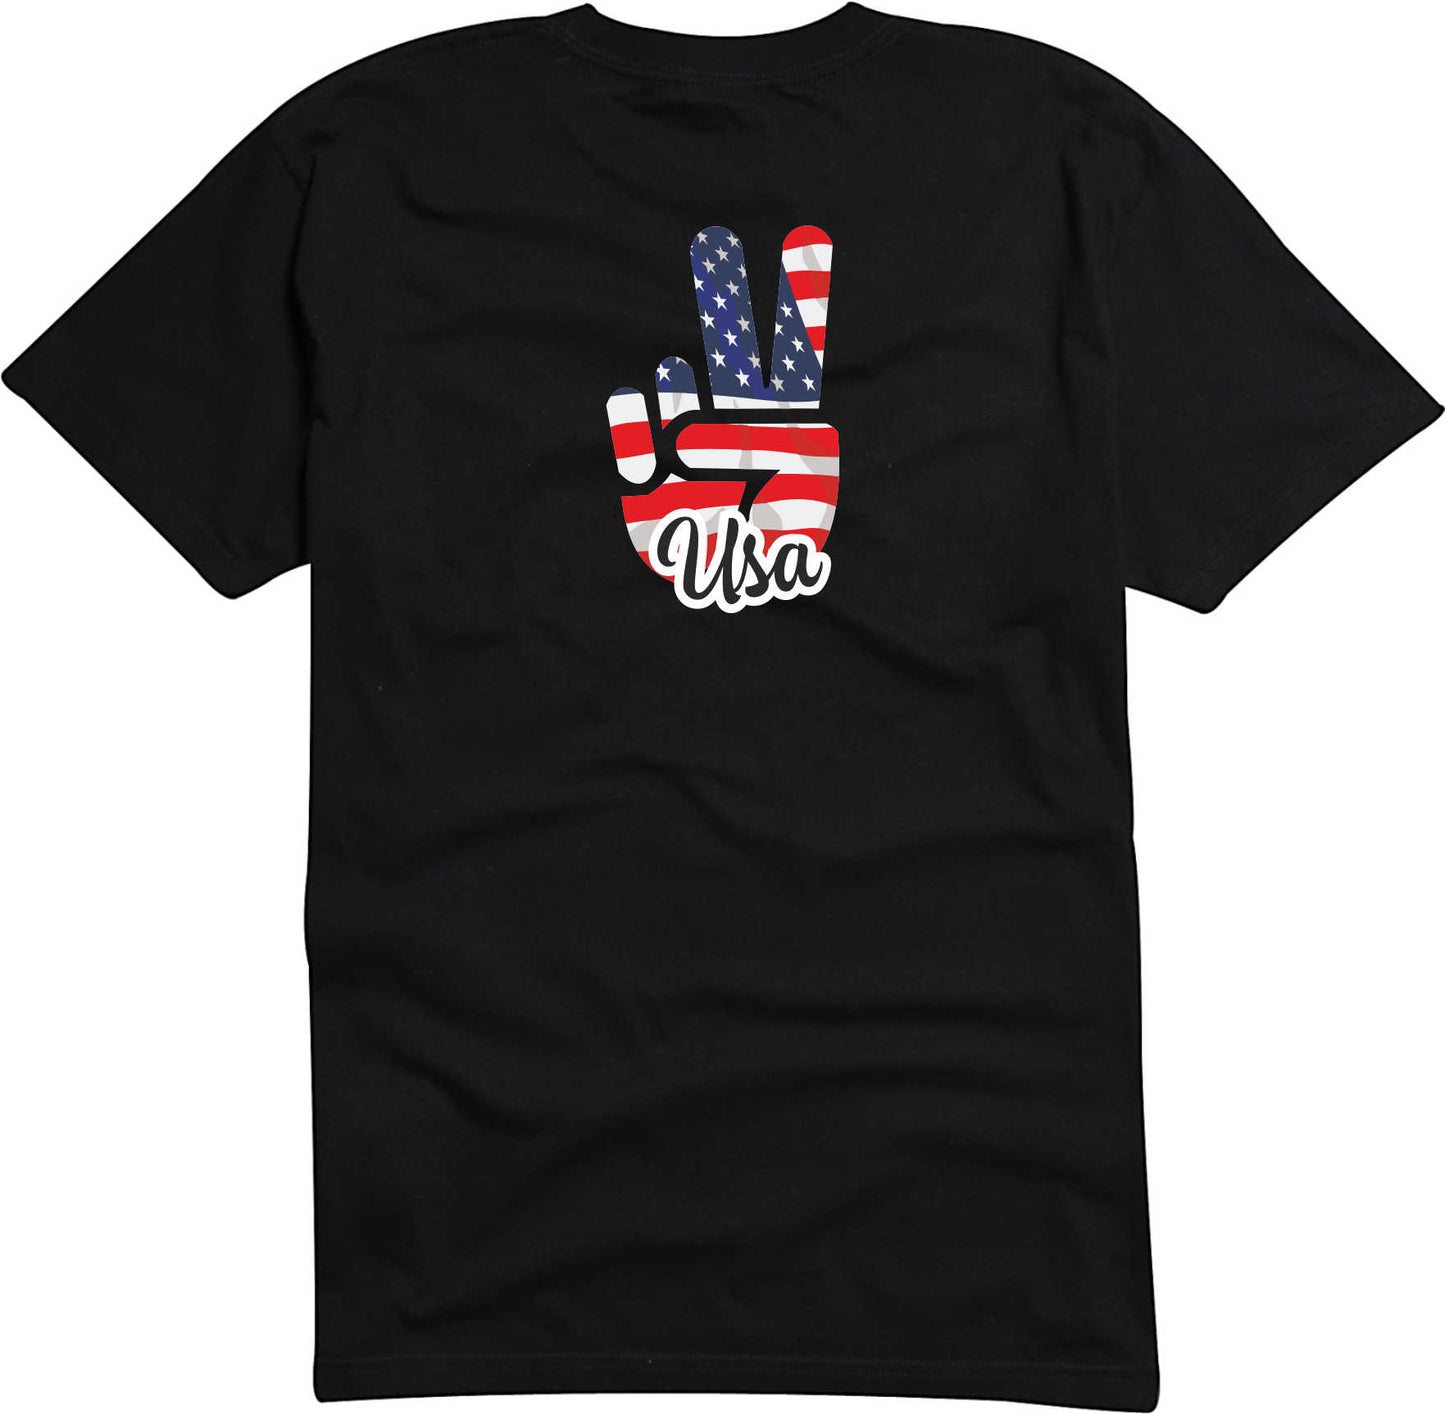 T-Shirt Herren - Victory - Flagge / Fahne - USA - Sieg